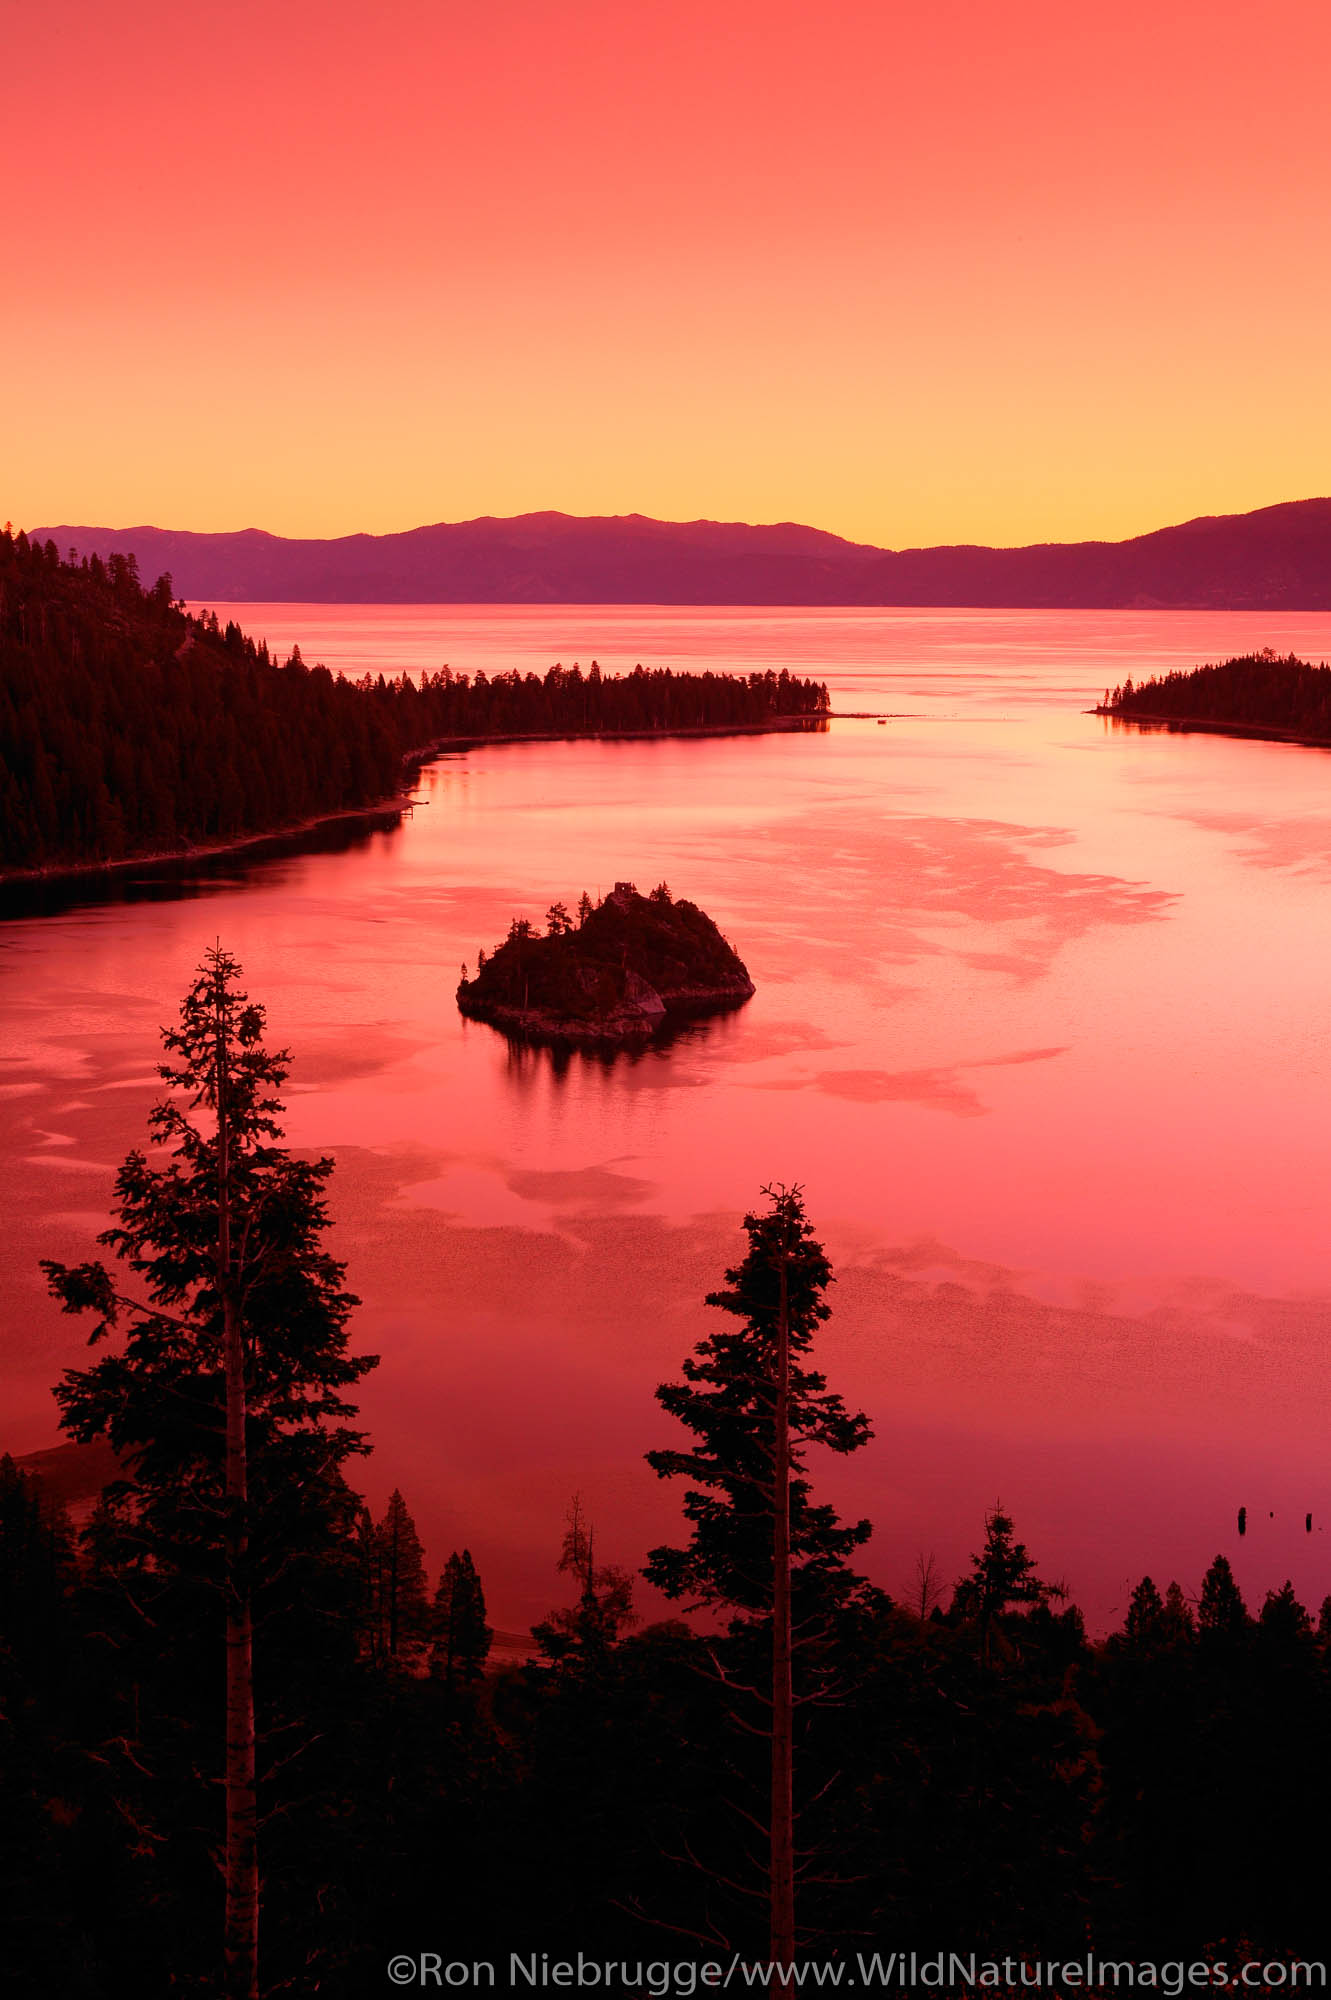 Emerald Bay at sunrise looking towards Nevada, Lake Tahoe, California.